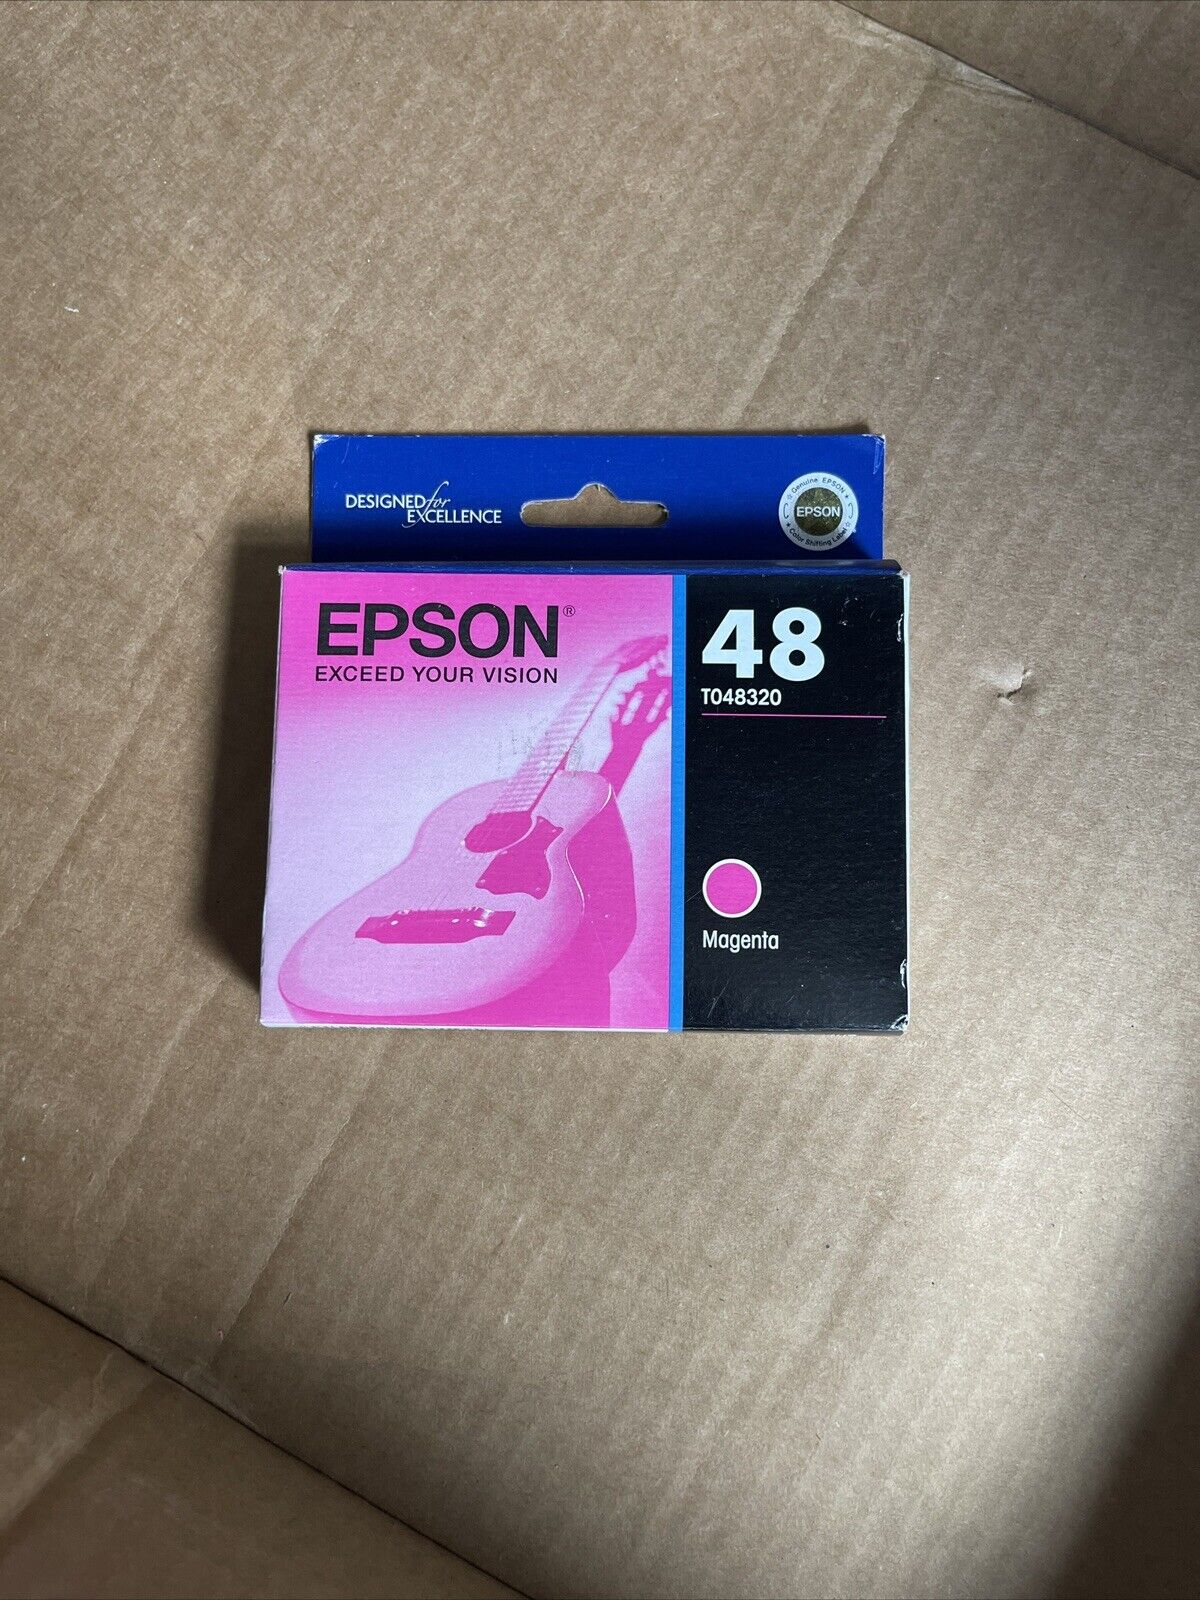 Epson T048320 Genuine Ink Cartridge Epson 48 Magenta - EXPIRED